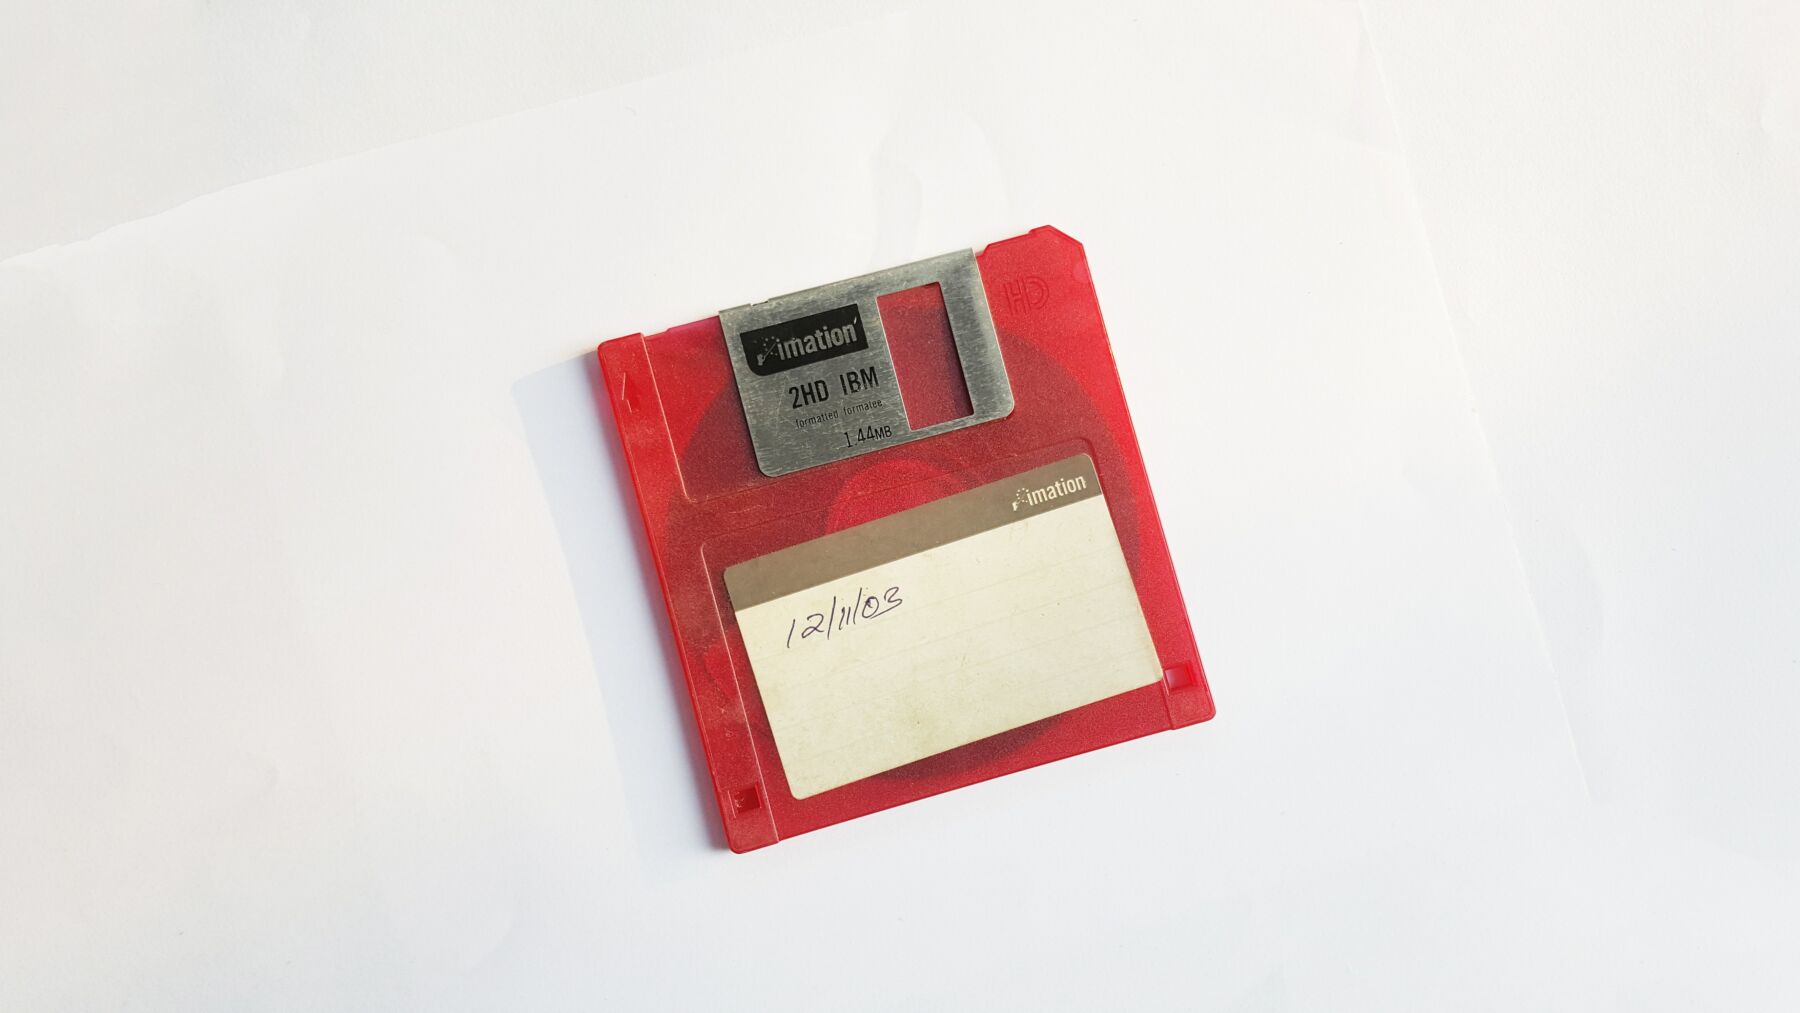 old floppy disk